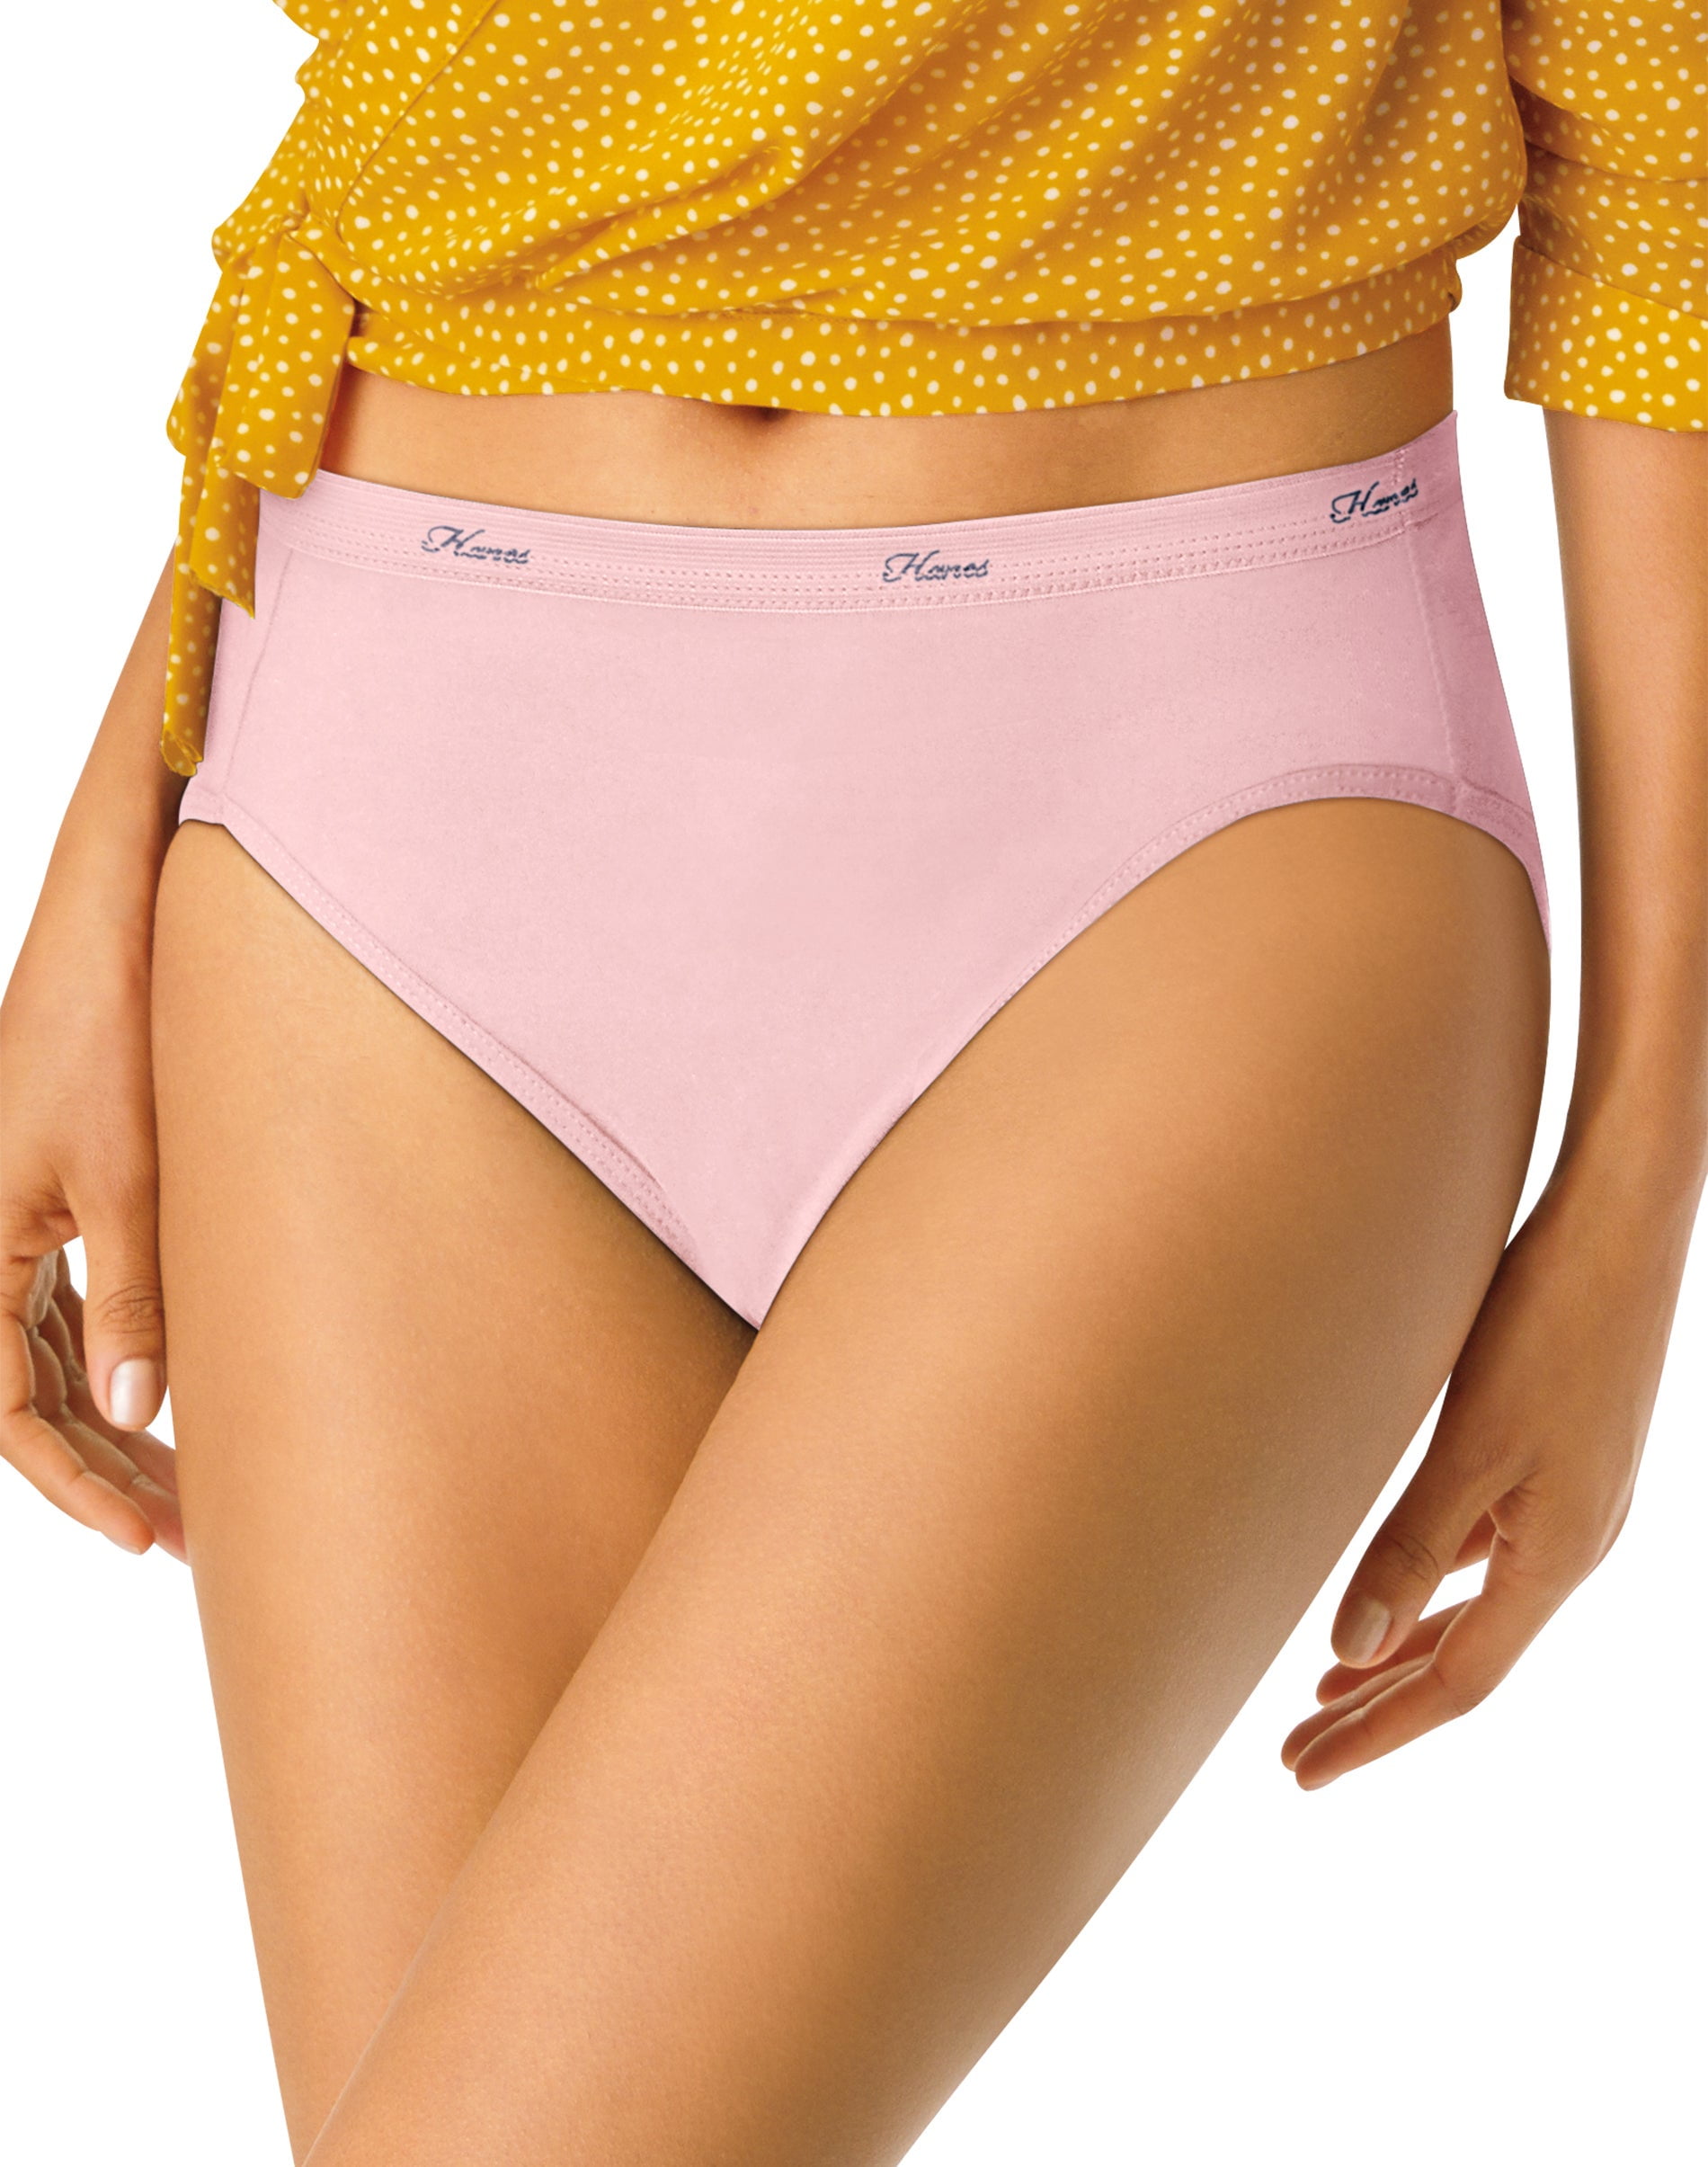 New 28 packs girls underwears (10 each pack - Girls bottoms